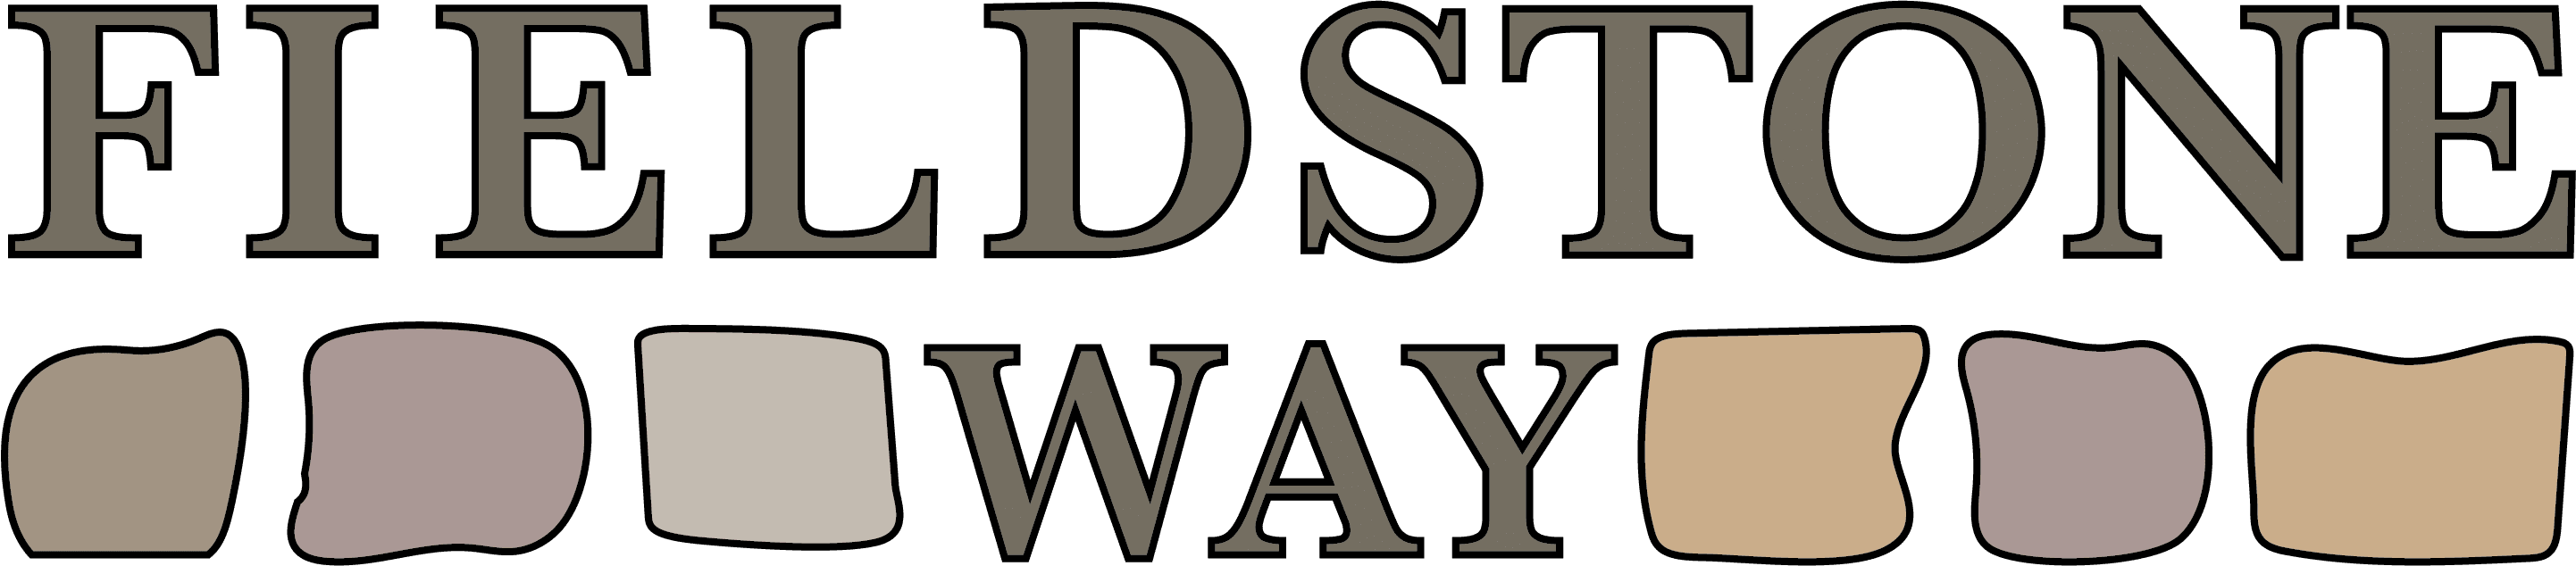 FieldstoneWay_Logo_OUT (002)